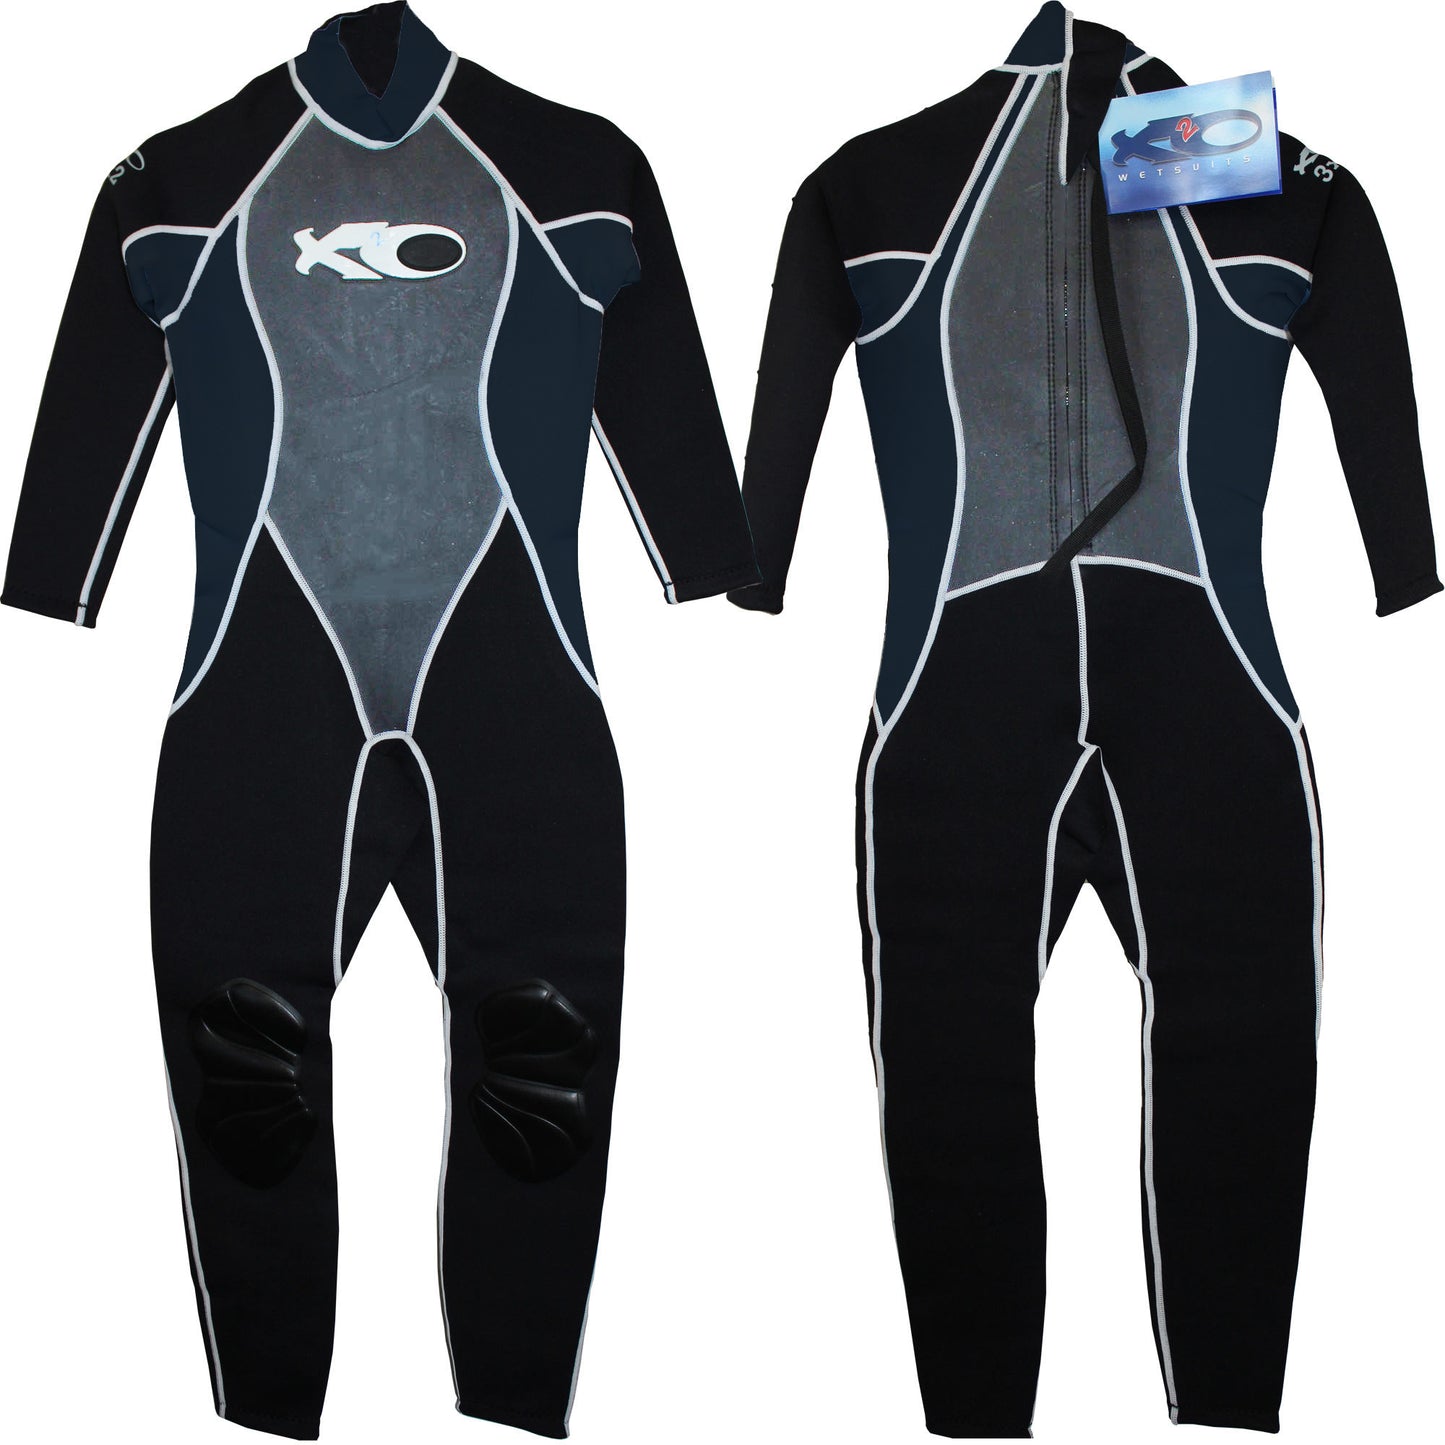 X2O Women's Full Wetsuit 3:2 Black - Small